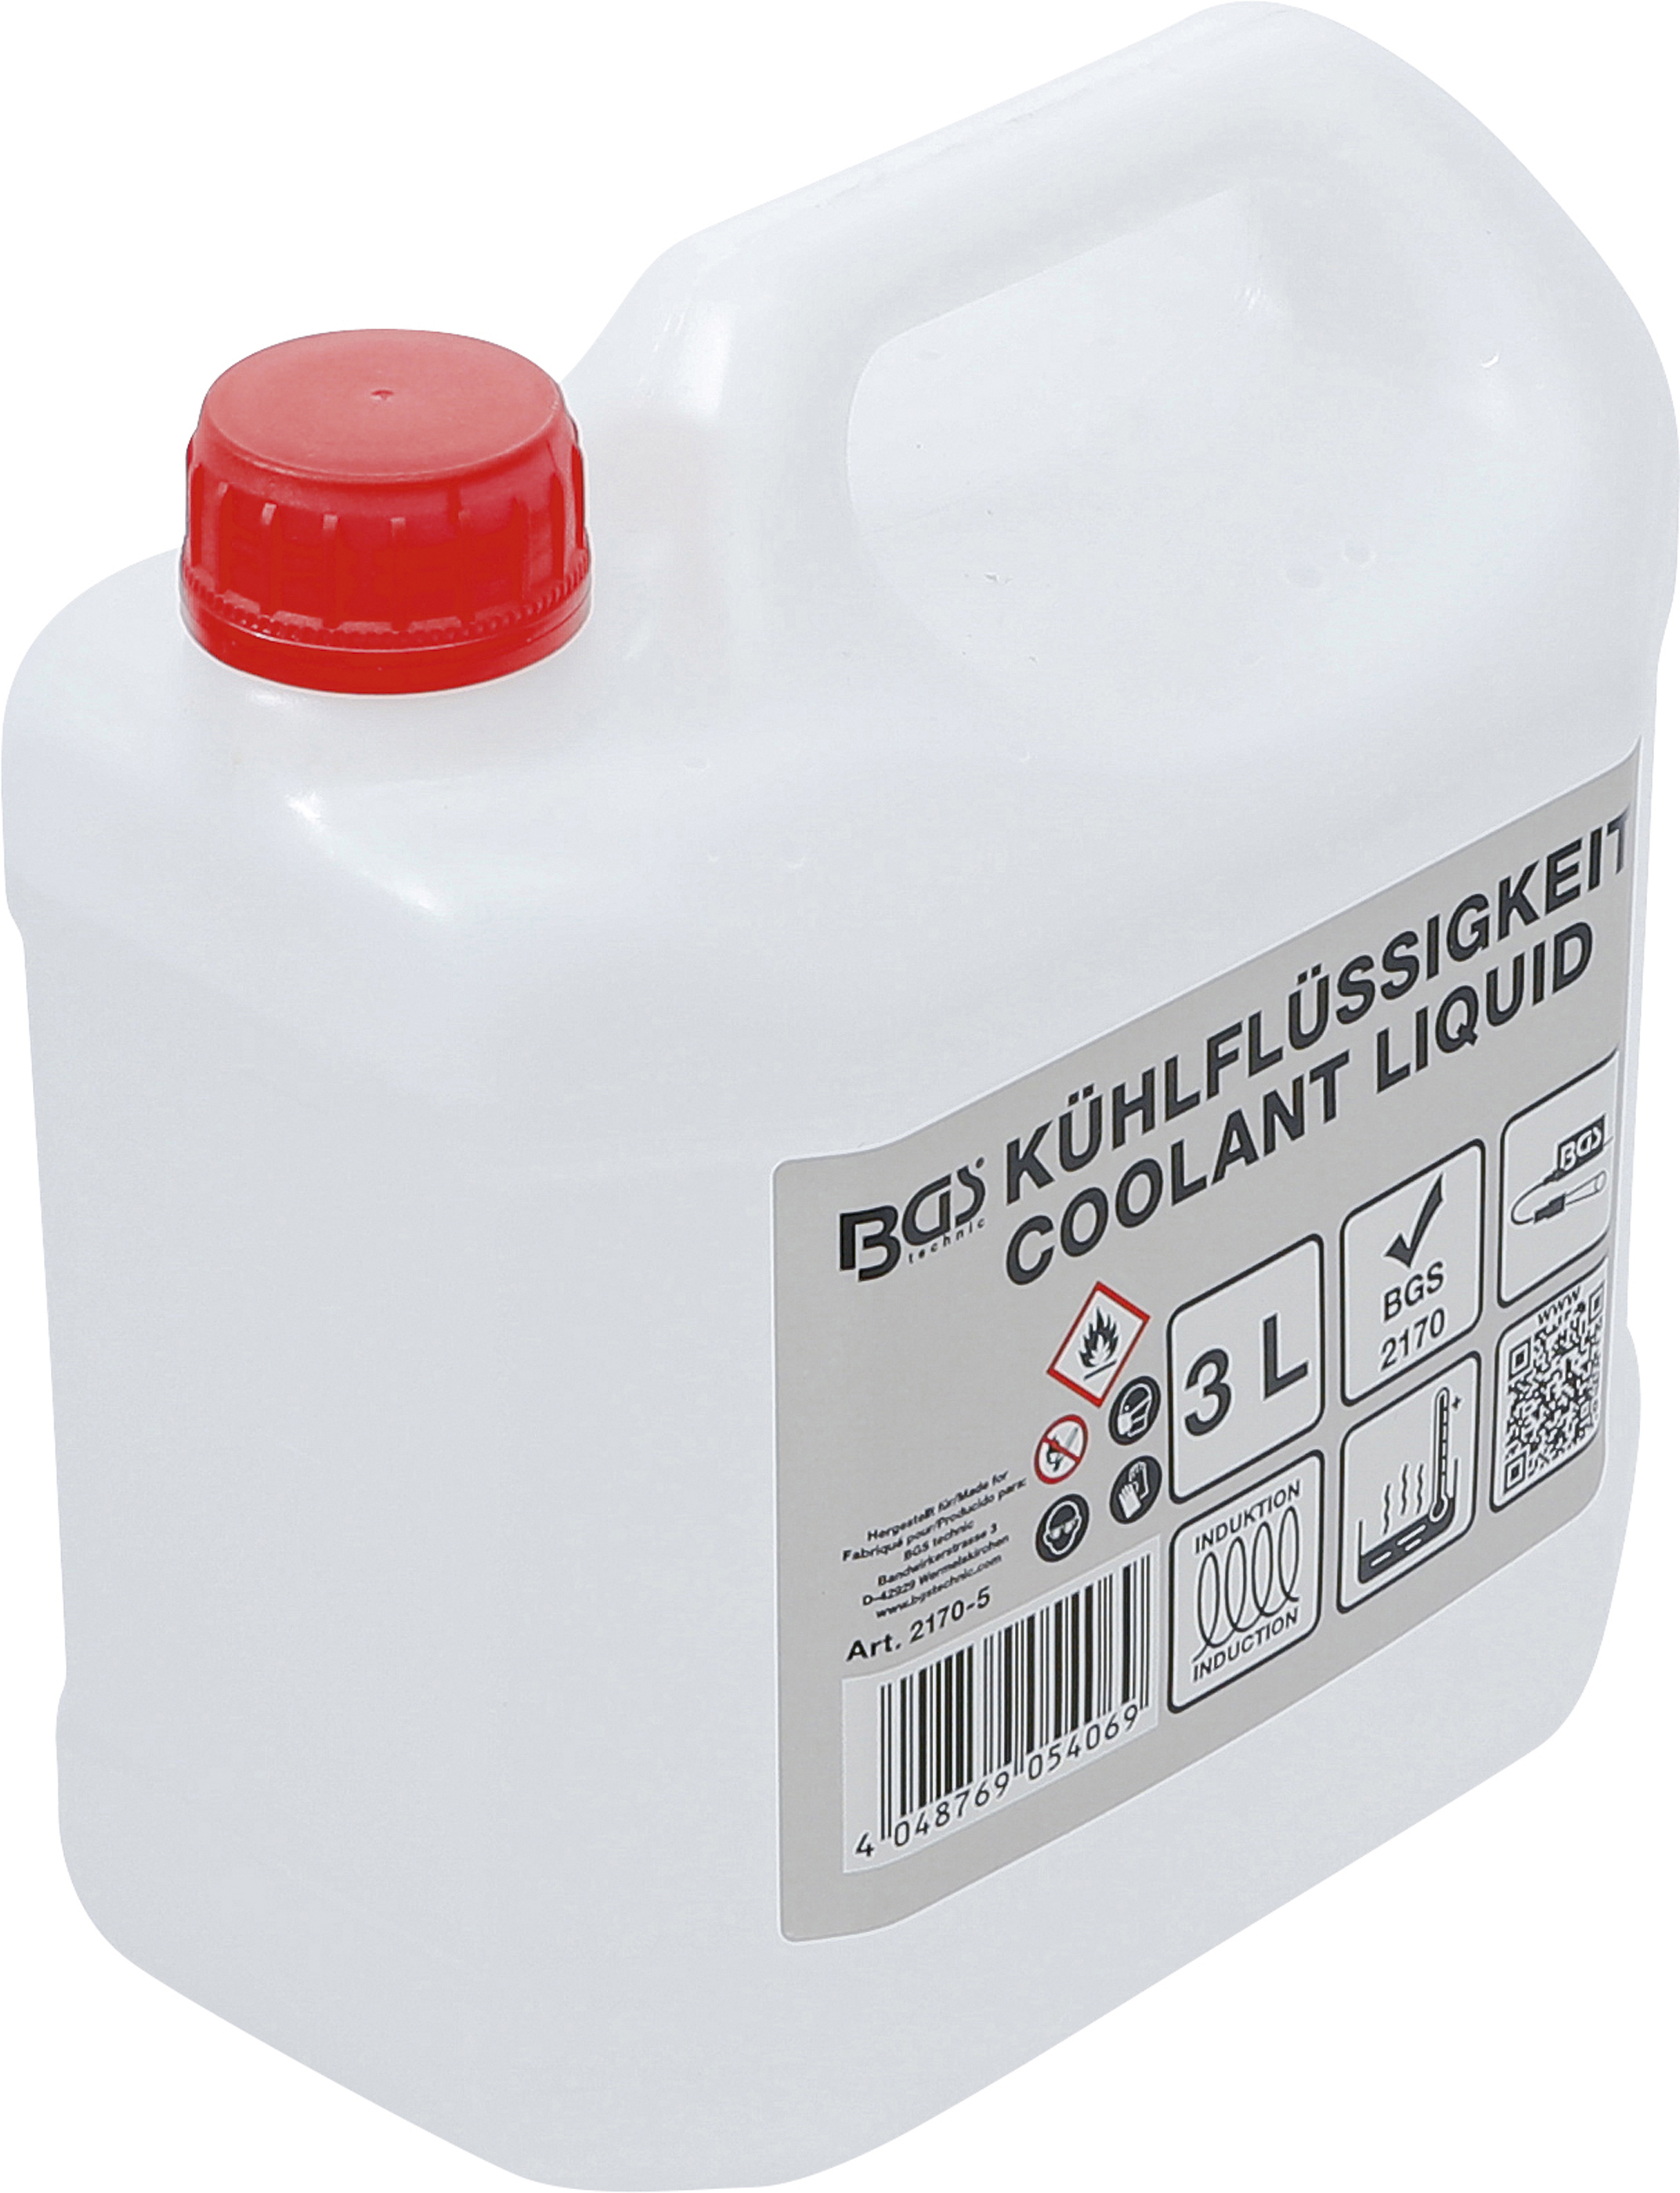 BGS 2170-5 Lichid de răcire pentru aparat de incalzit prin inductie BGS 2170, recipient 3 litri